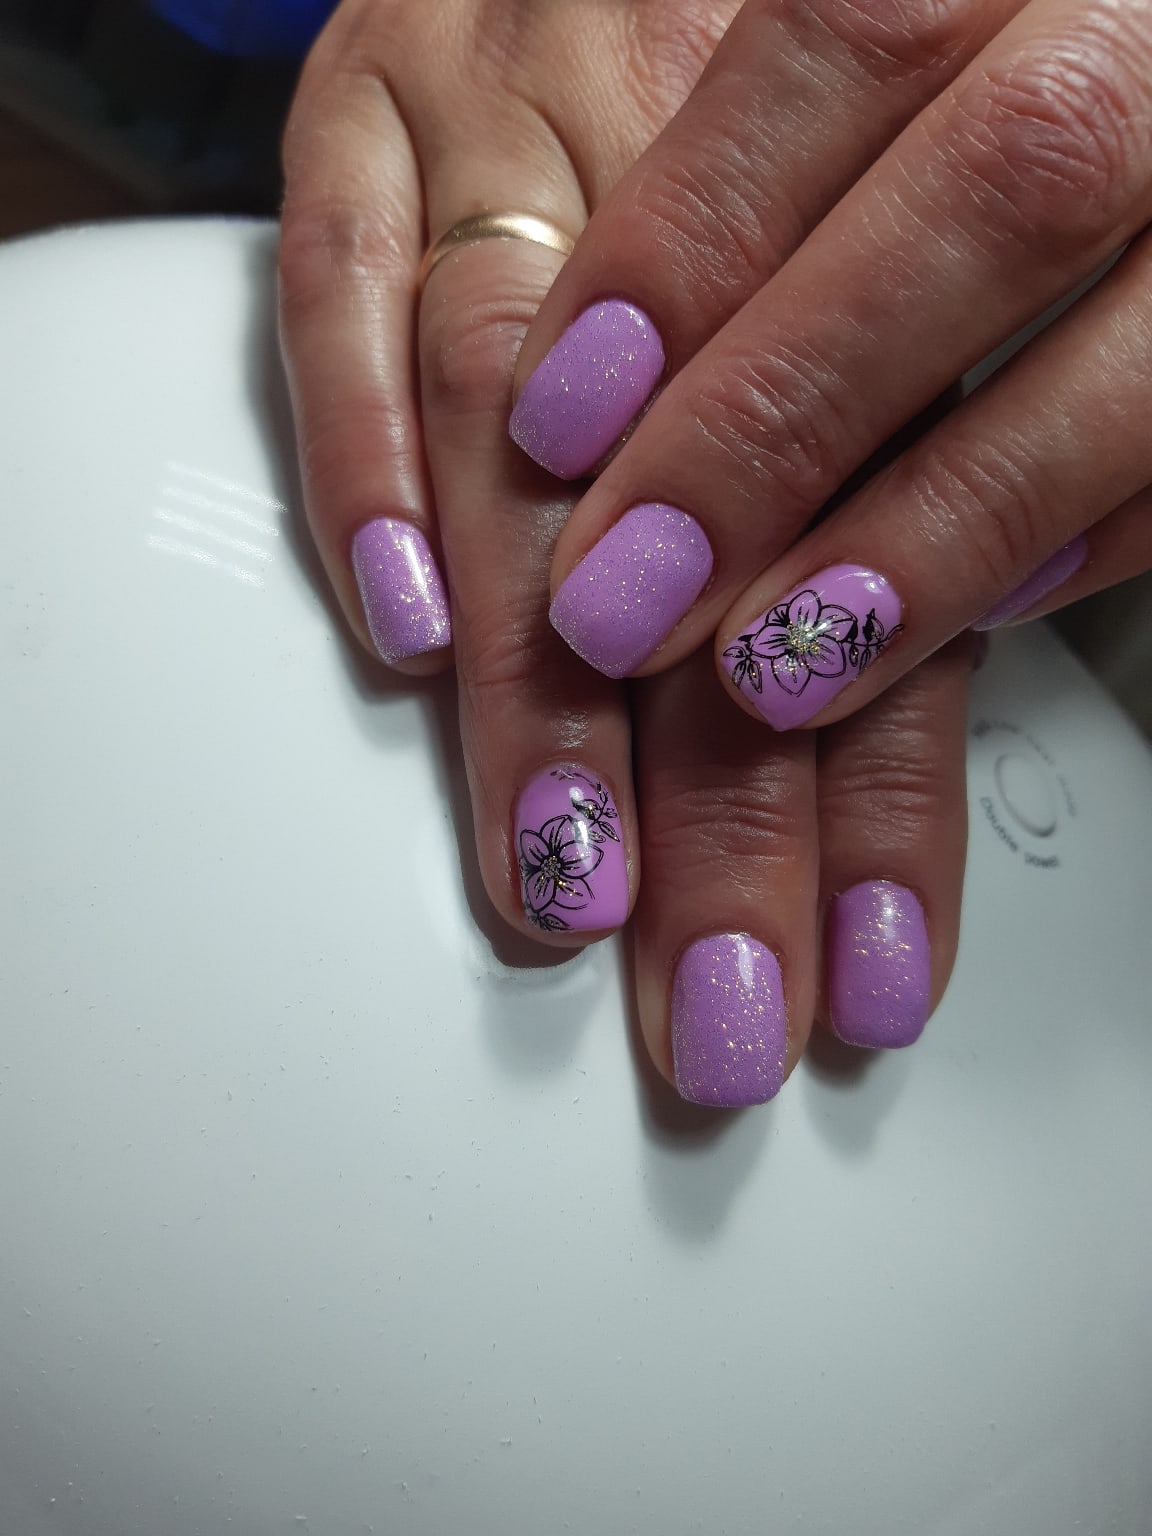 Маникюр с цветочными слайдерами и блестками в сиреневом цвете на короткие ногти.